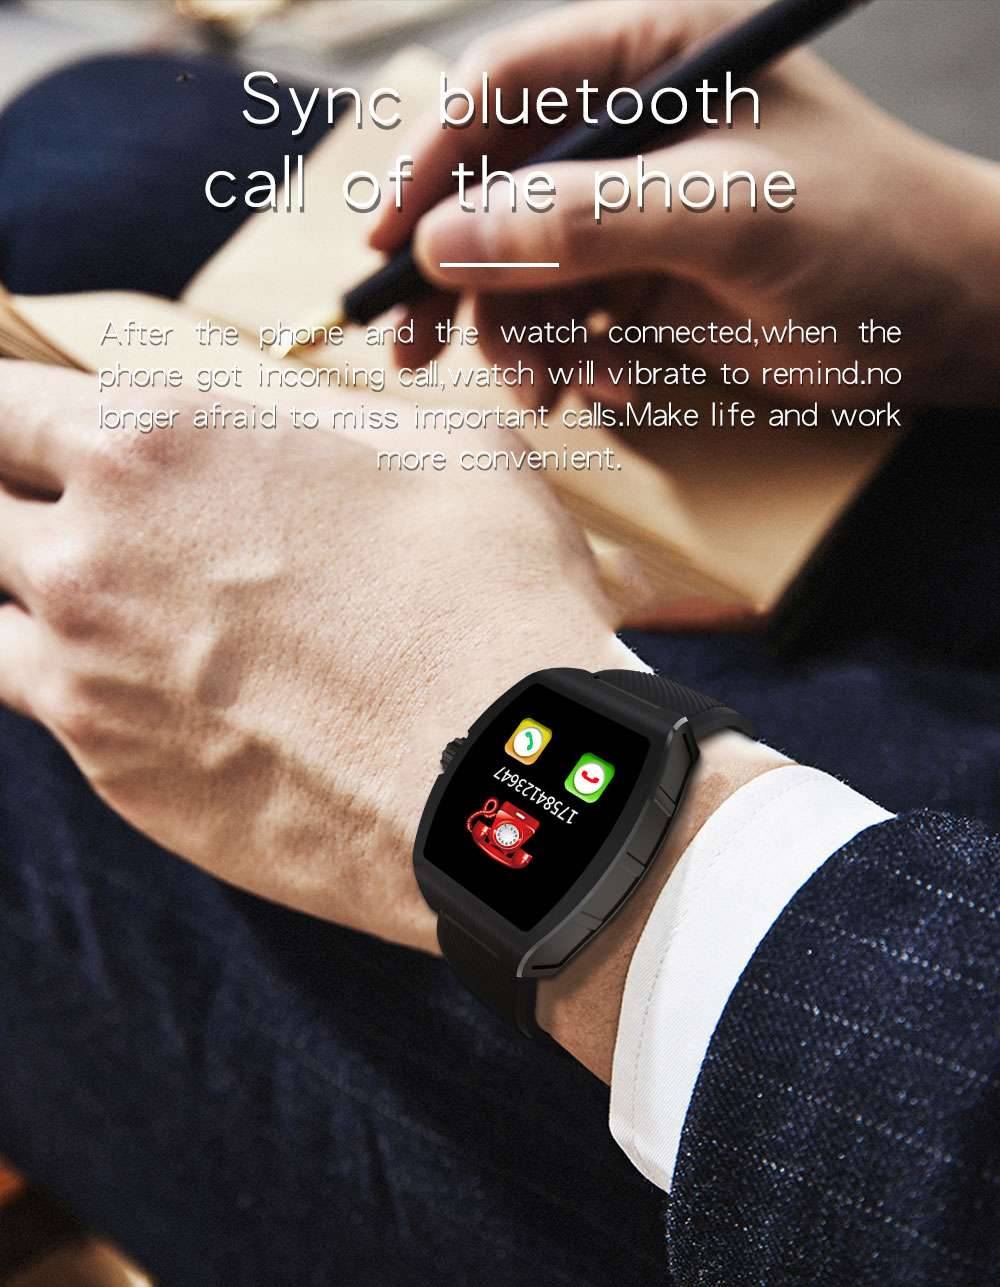 Smart Watch for Men Women Tonneau Watch with Temperature Monitor Bluetooth Heart Rate Blood Pressure Waterproof Watches часы C1